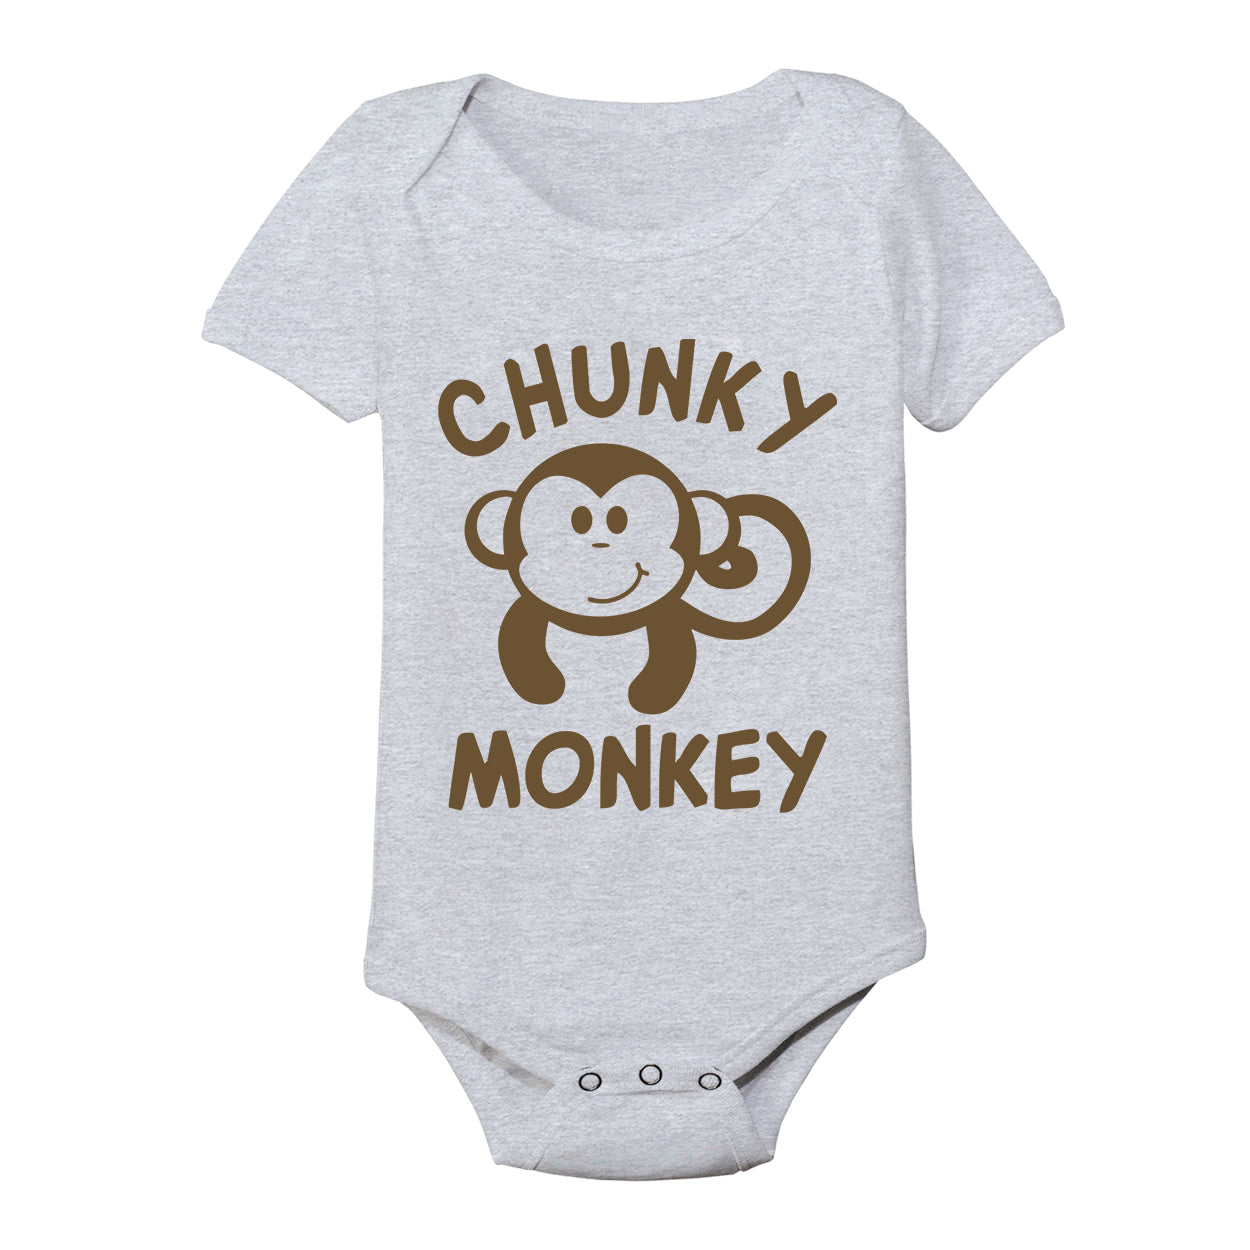 Chunky Monkey Kids Tshirt - Donkey Tees